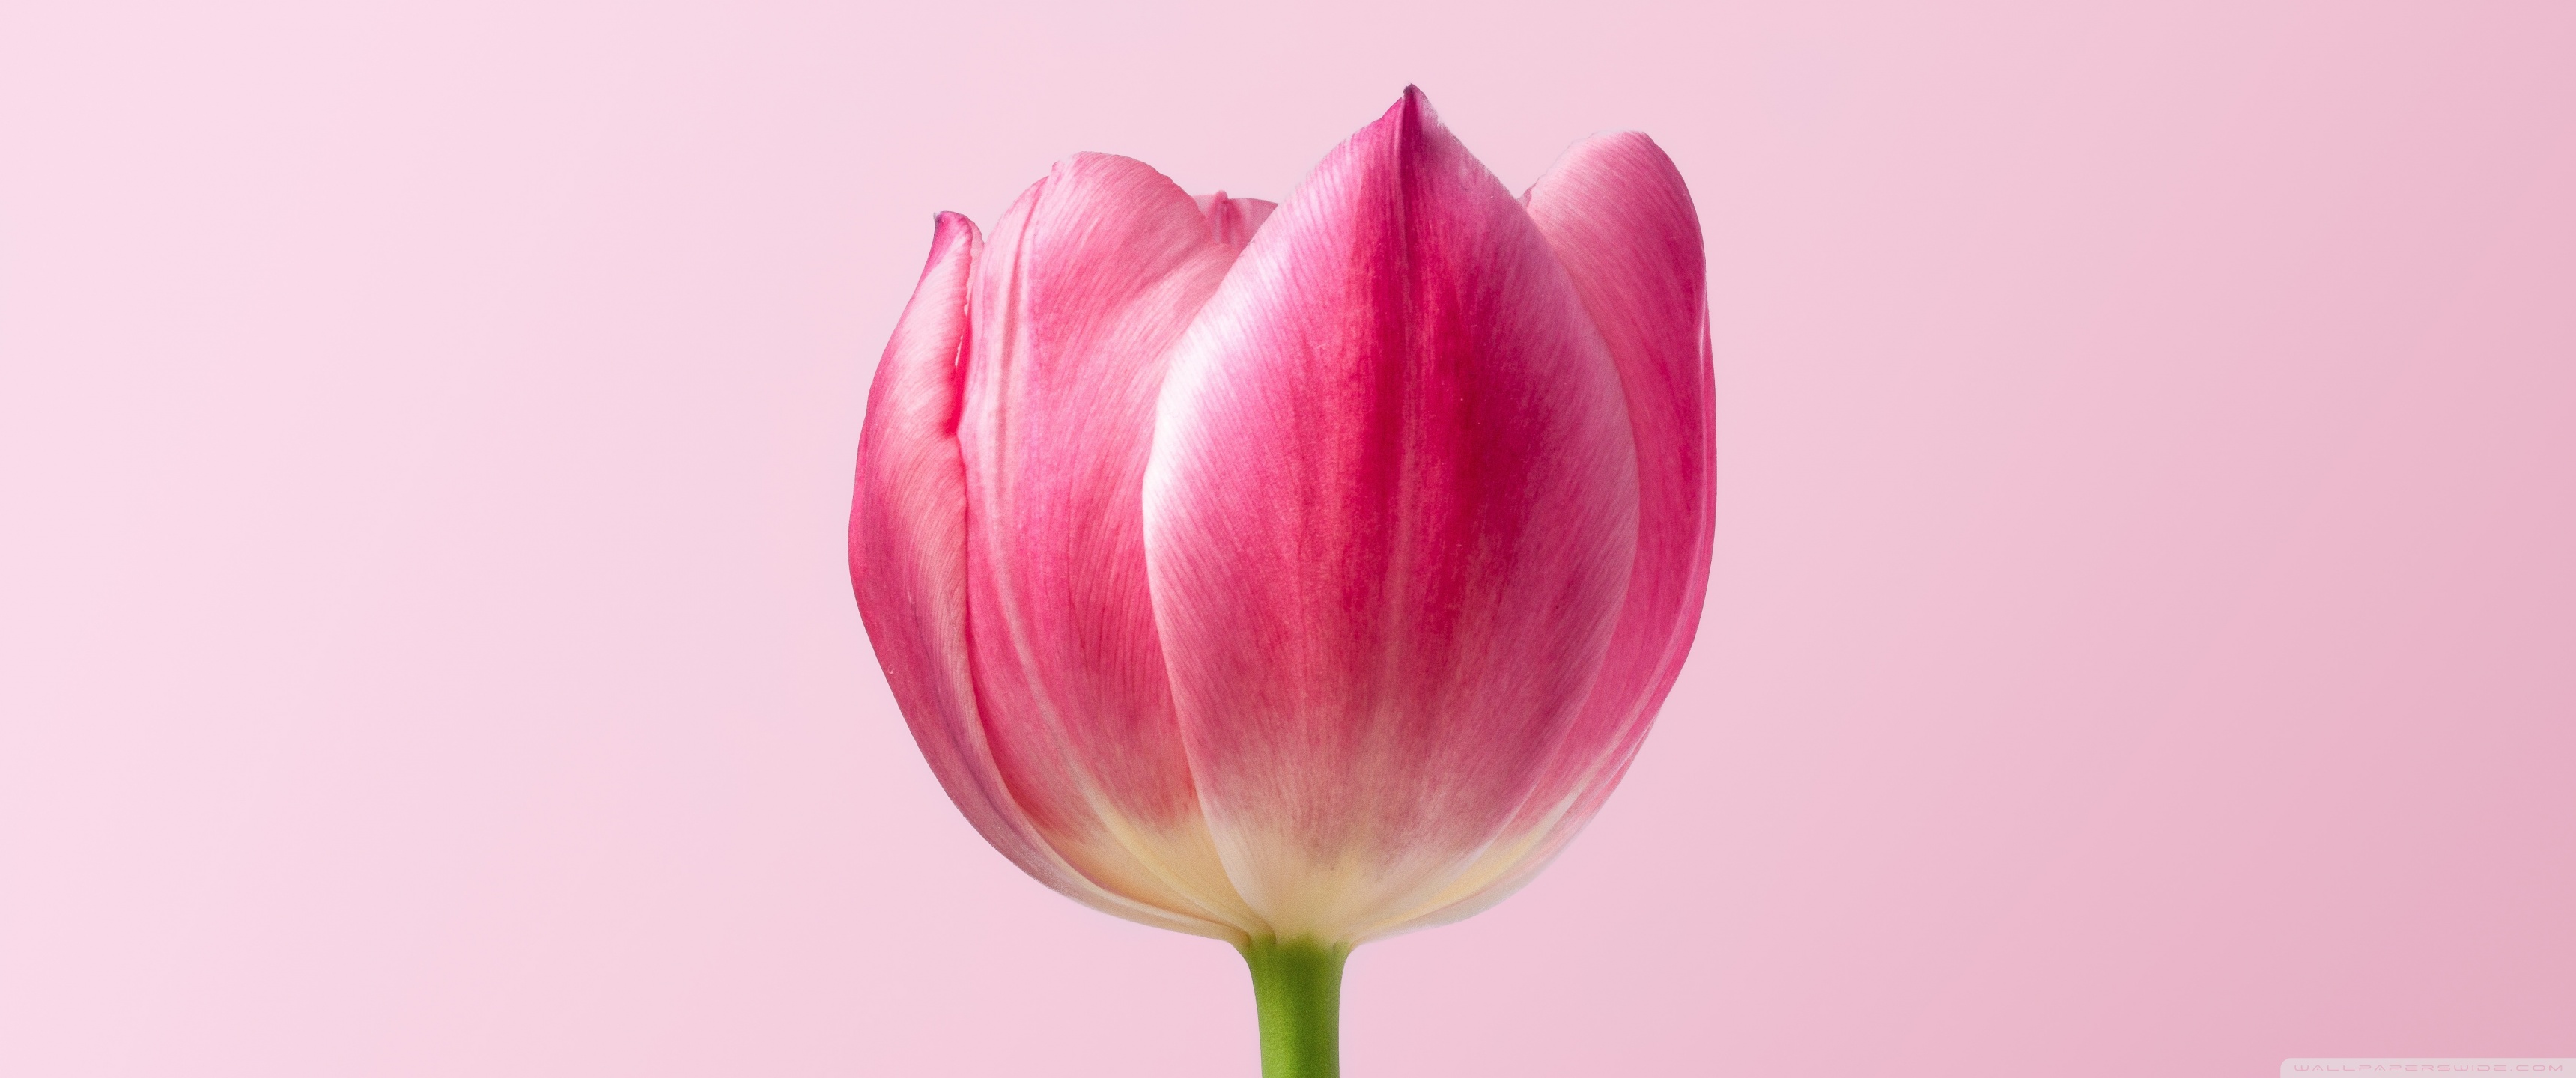 Single Pink Tulip Spring Flower, Pink Background Ultra HD Desktop Background Wallpaper for 4K UHD TV, Widescreen & UltraWide Desktop & Laptop, Multi Display, Dual Monitor, Tablet